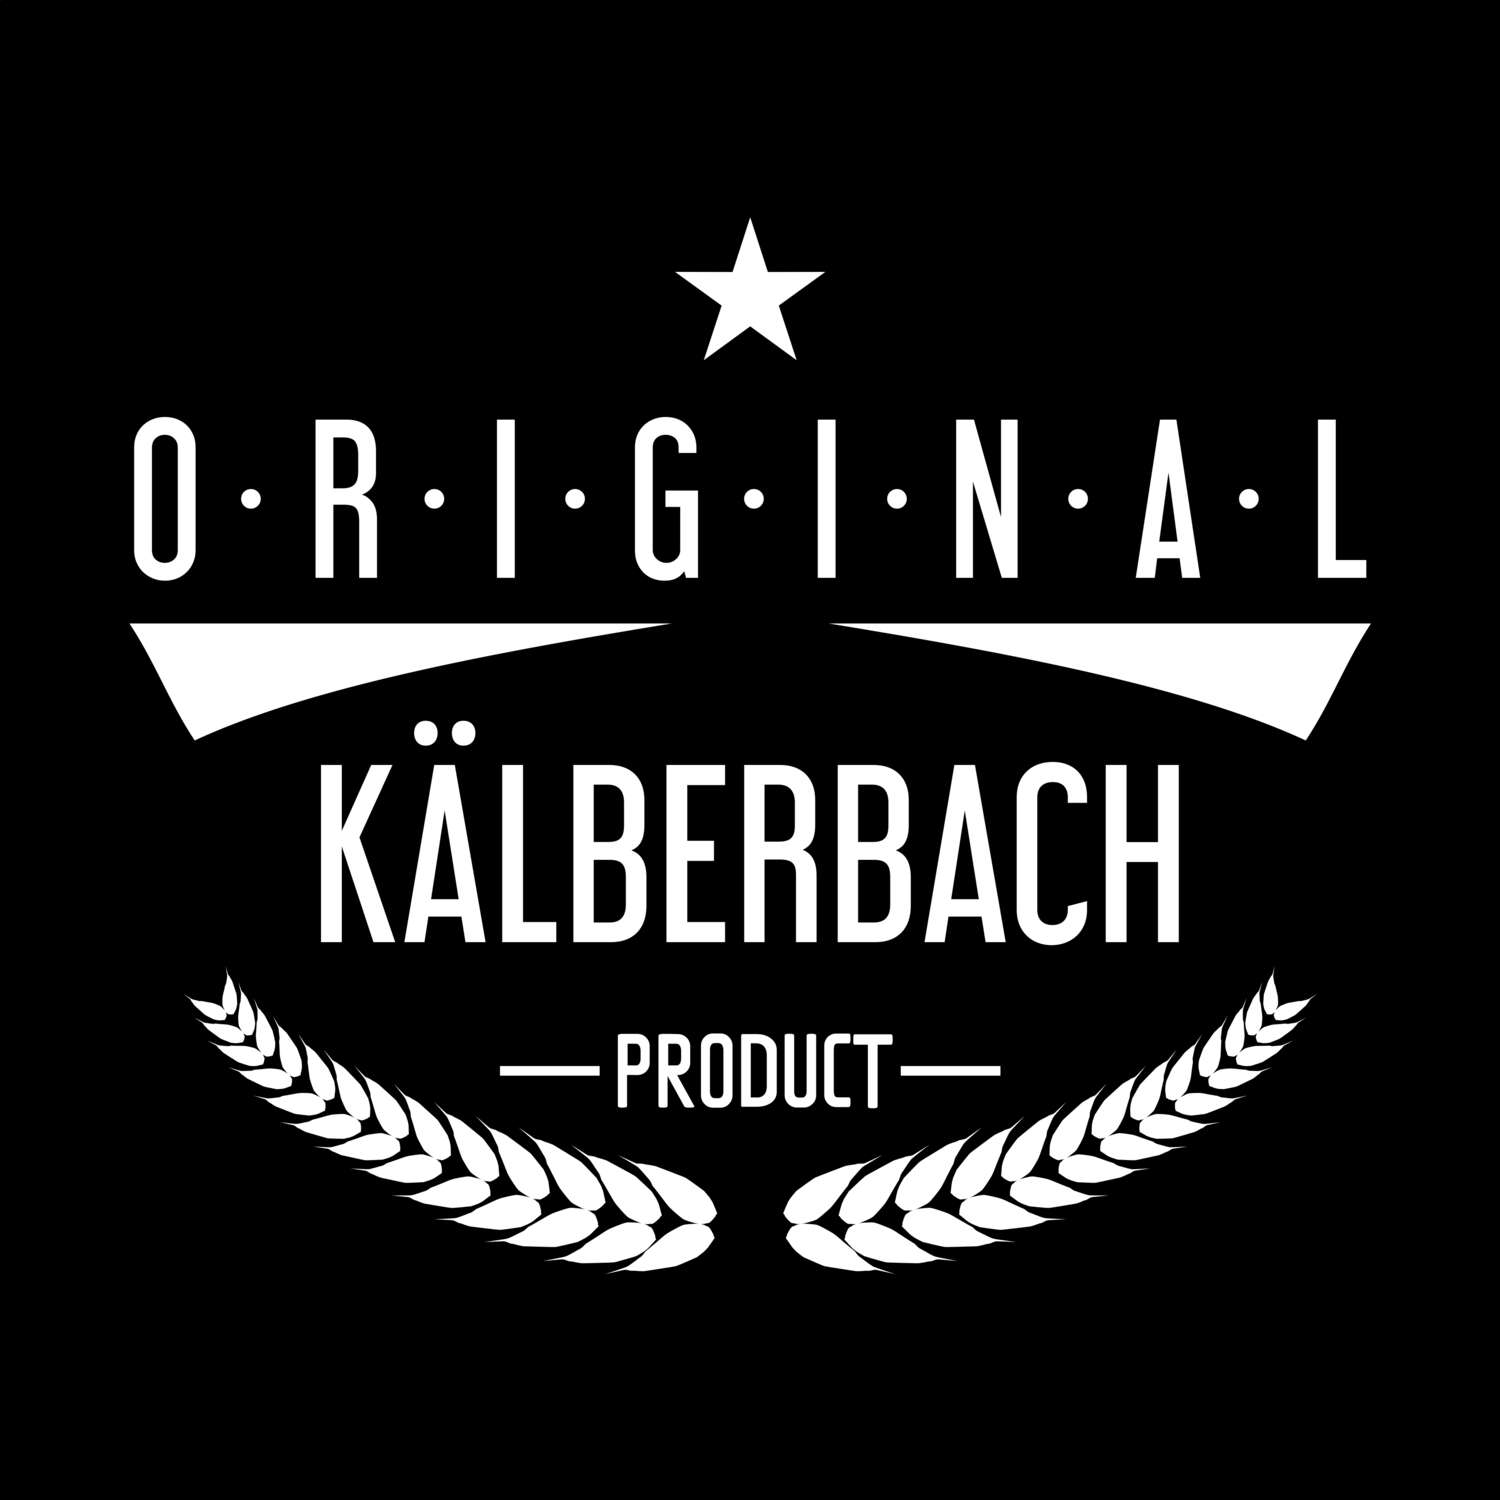 Kälberbach T-Shirt »Original Product«